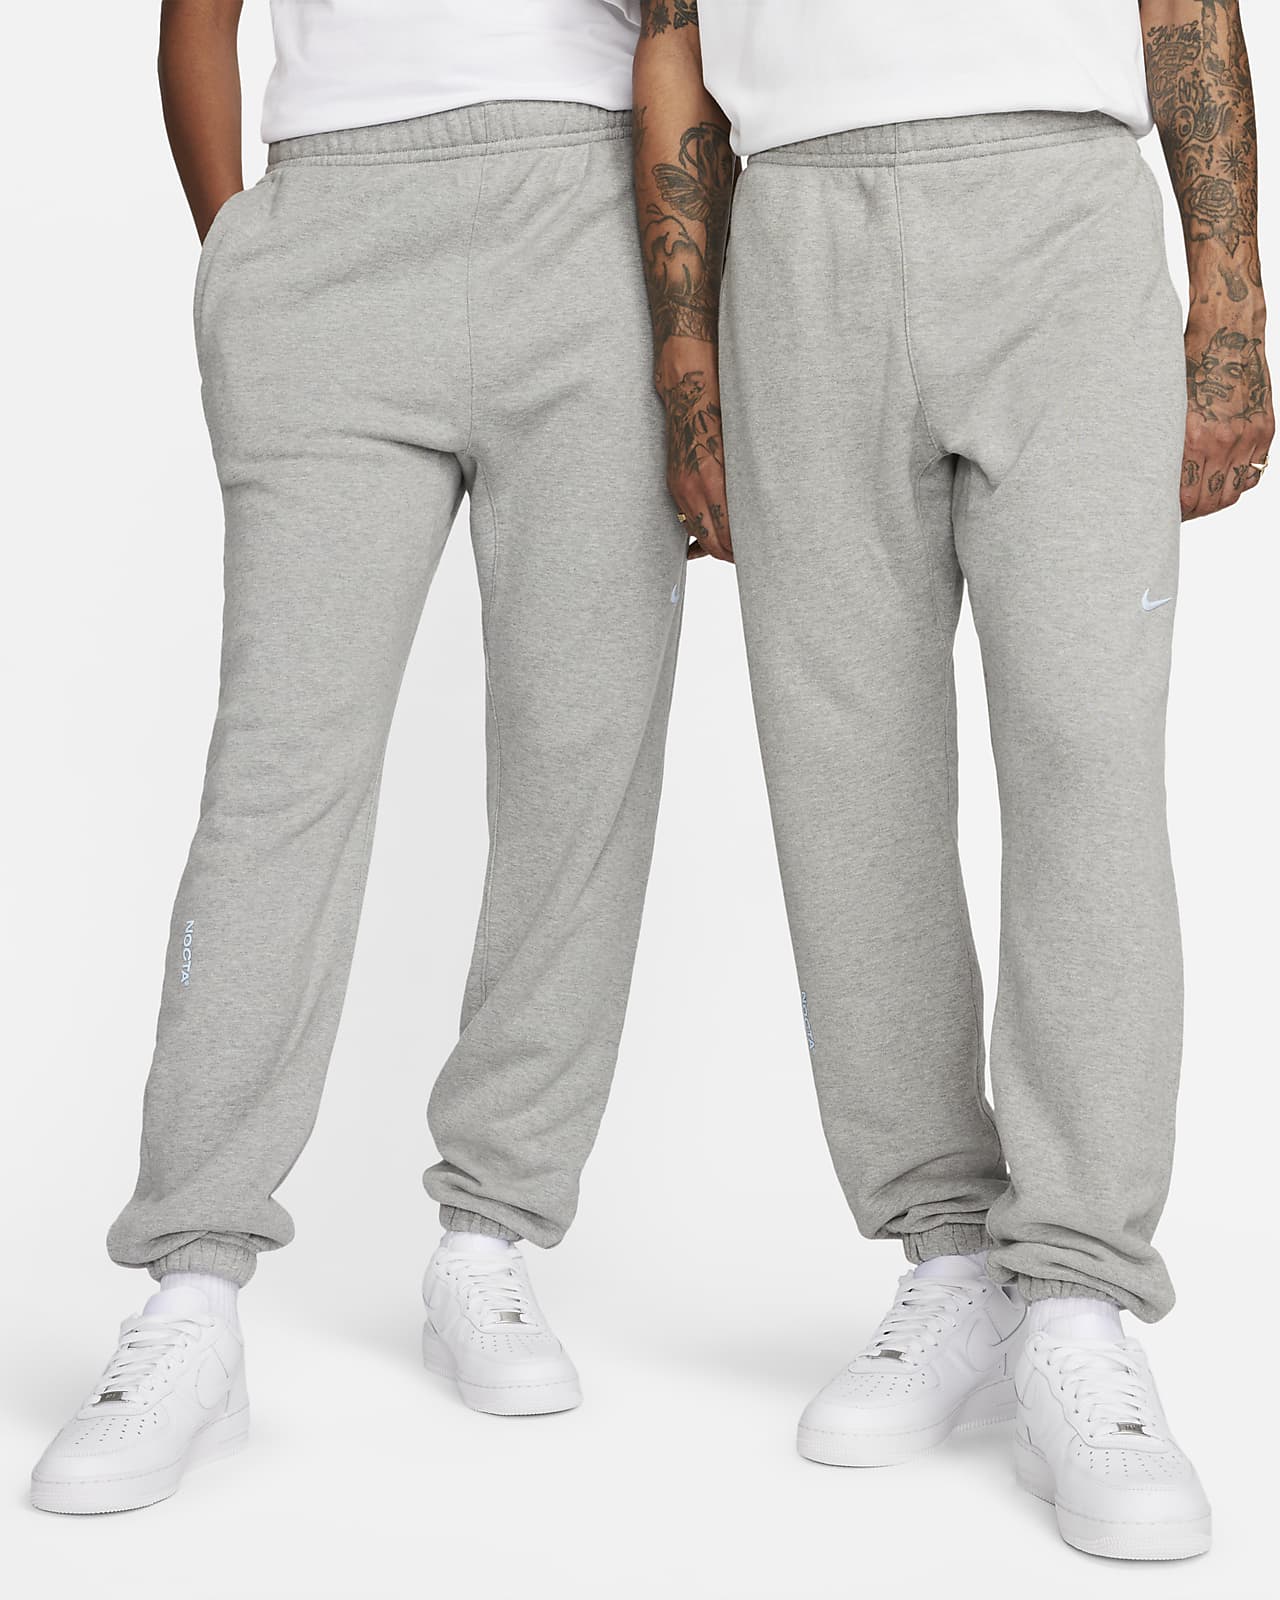 NOCTA Men's Fleece Basketball Trousers. Nike CZ